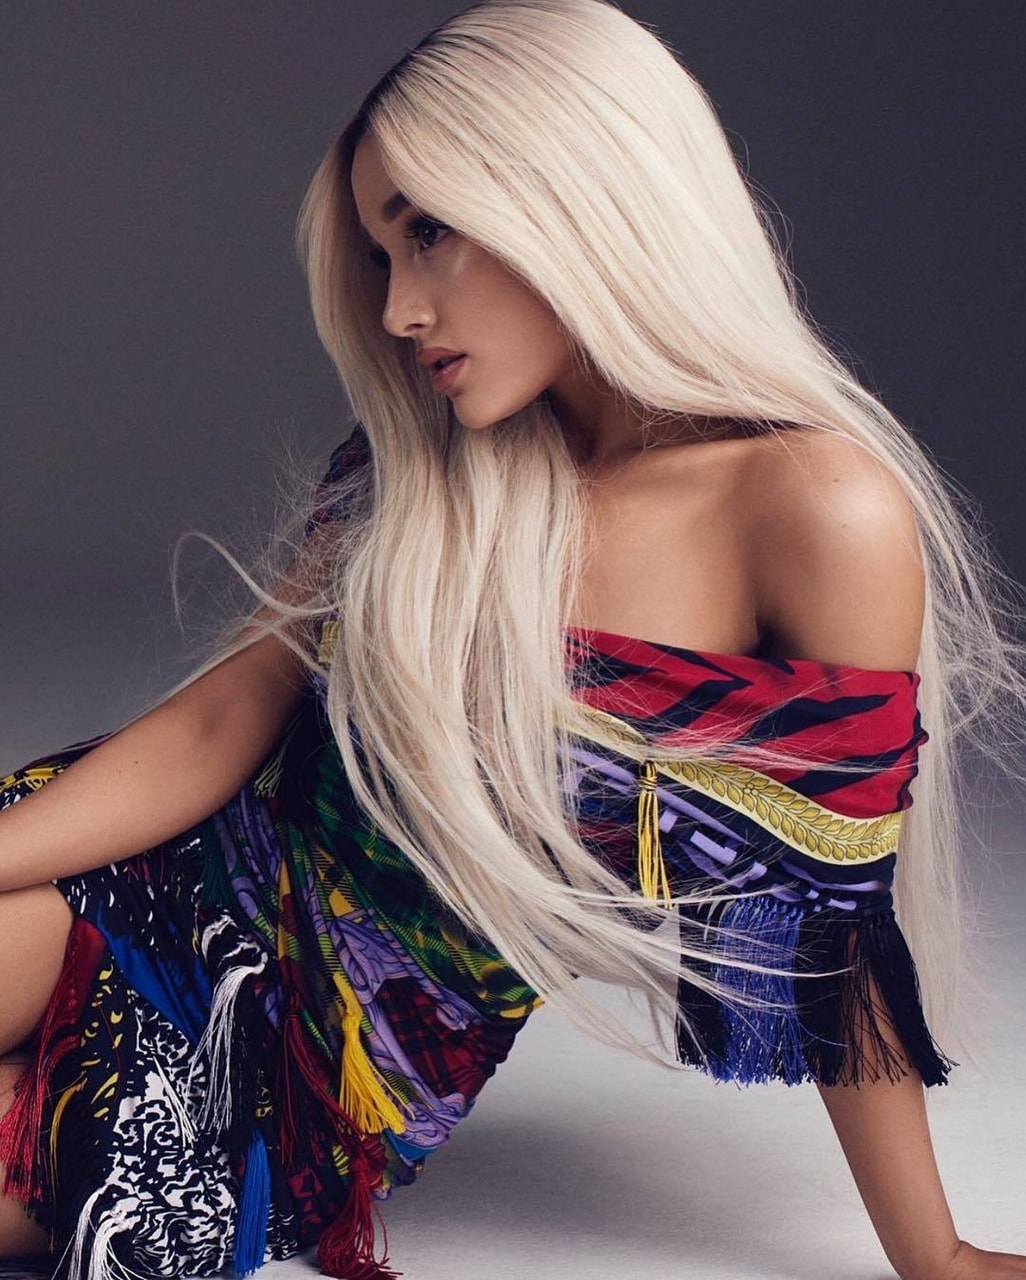 Wallpaper, Ariana Grande Wallpaper And Ariana Grande - Ariana Grande Photoshoots 2018 - HD Wallpaper 